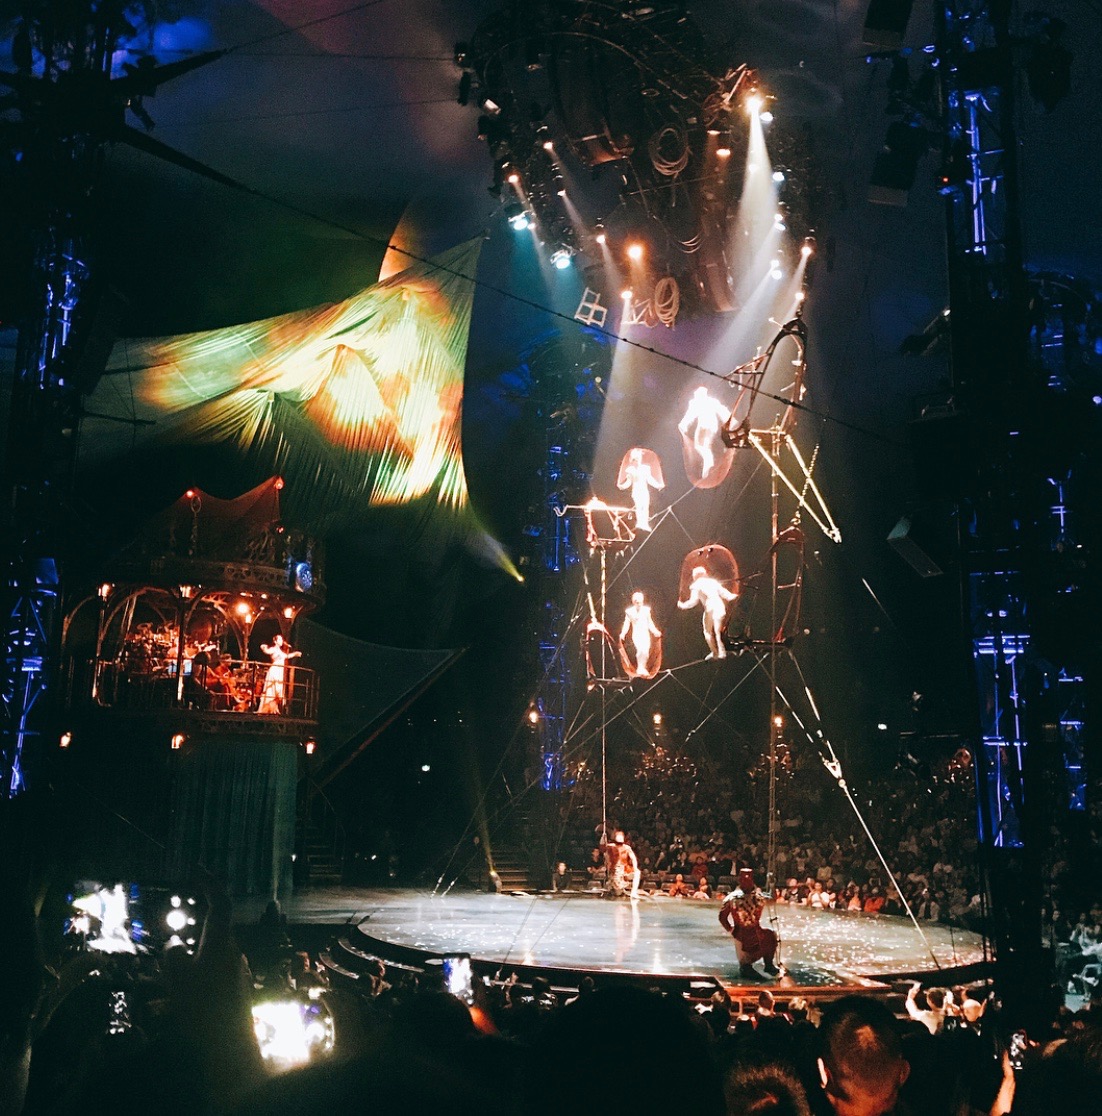 Hong Kong tour package with Cirque du Soleil